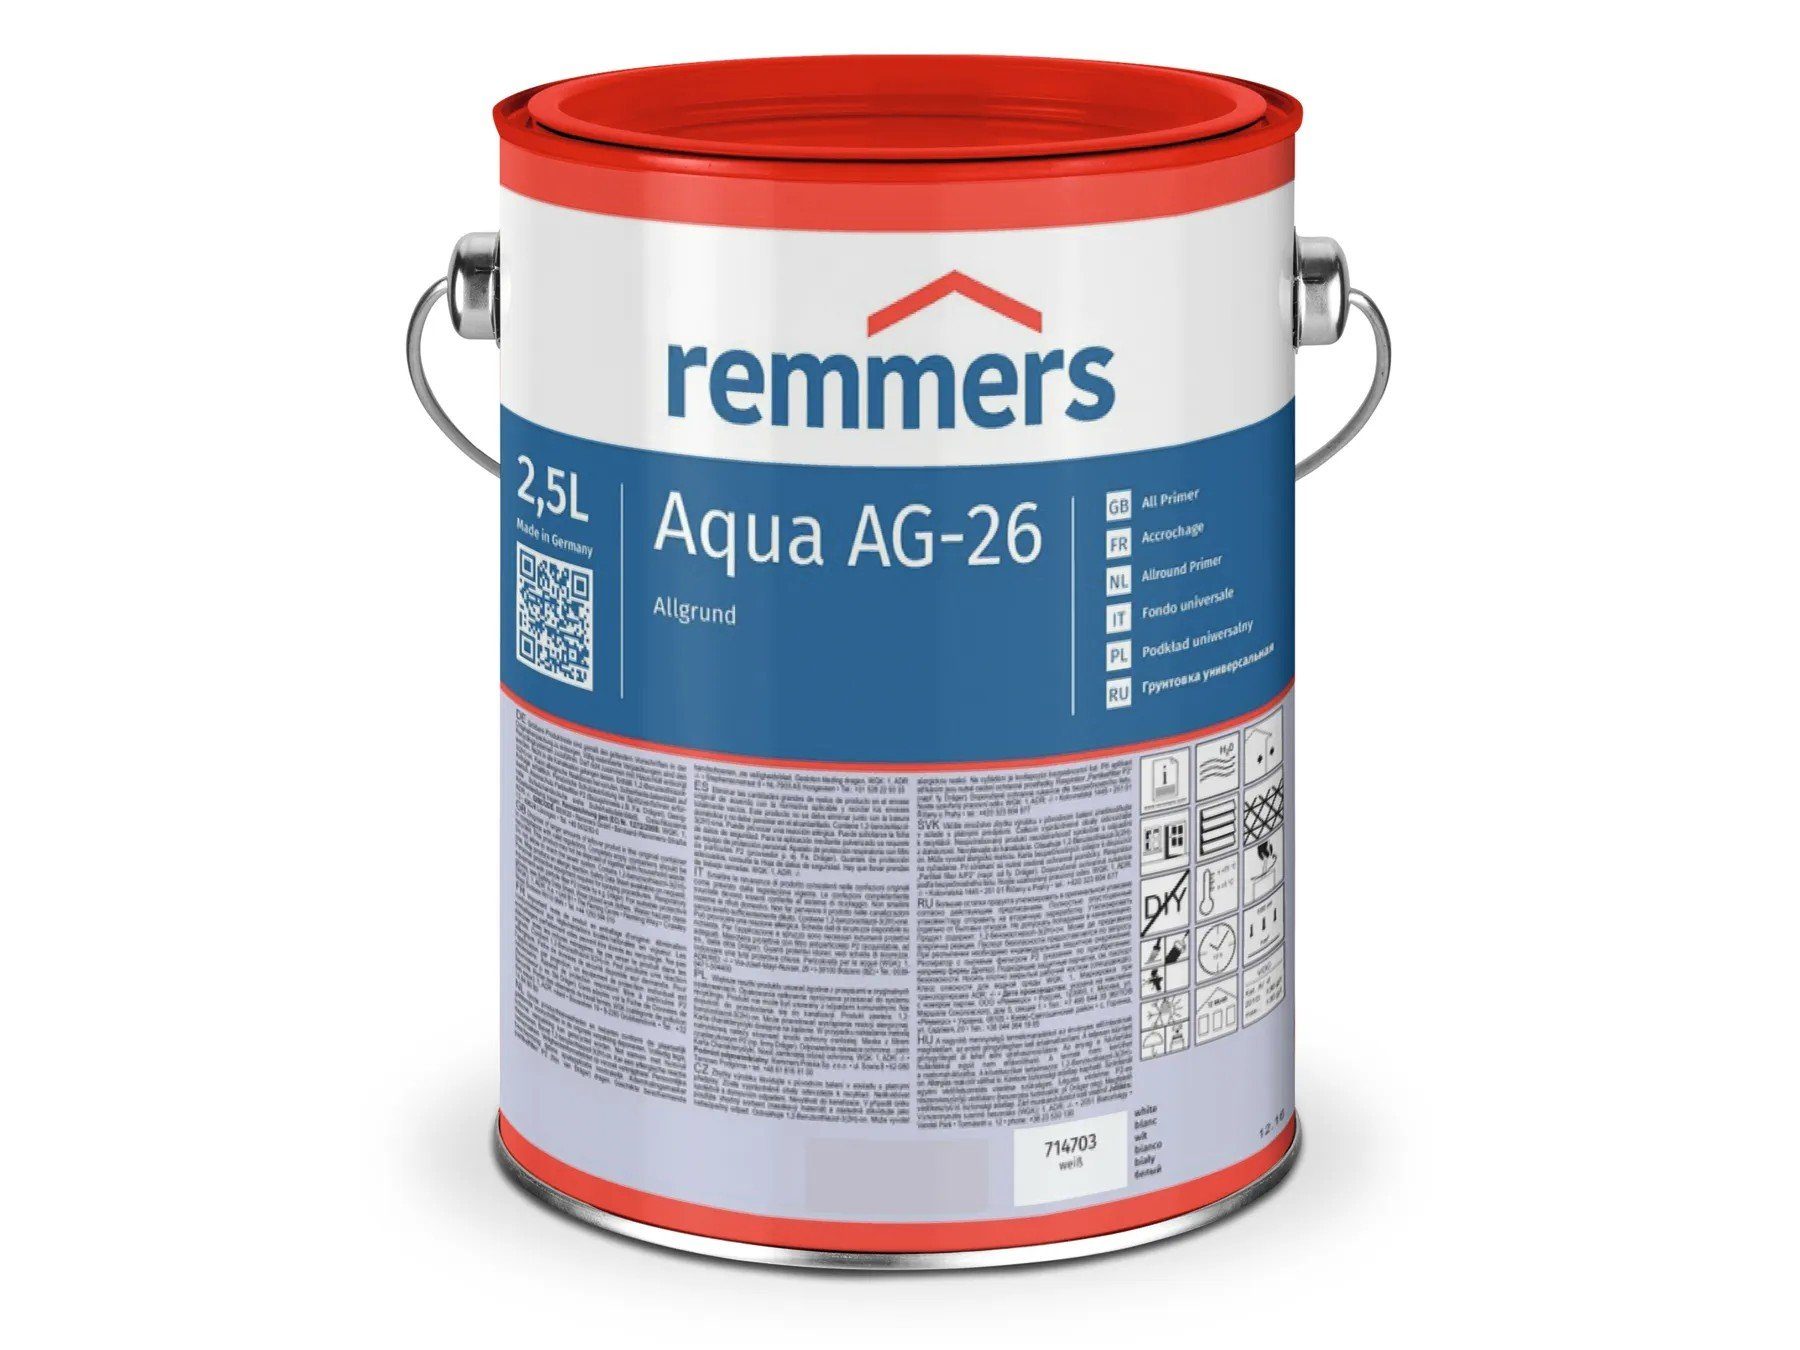 Remmers Haftgrund Aqua AG-26-Allgrund weiß